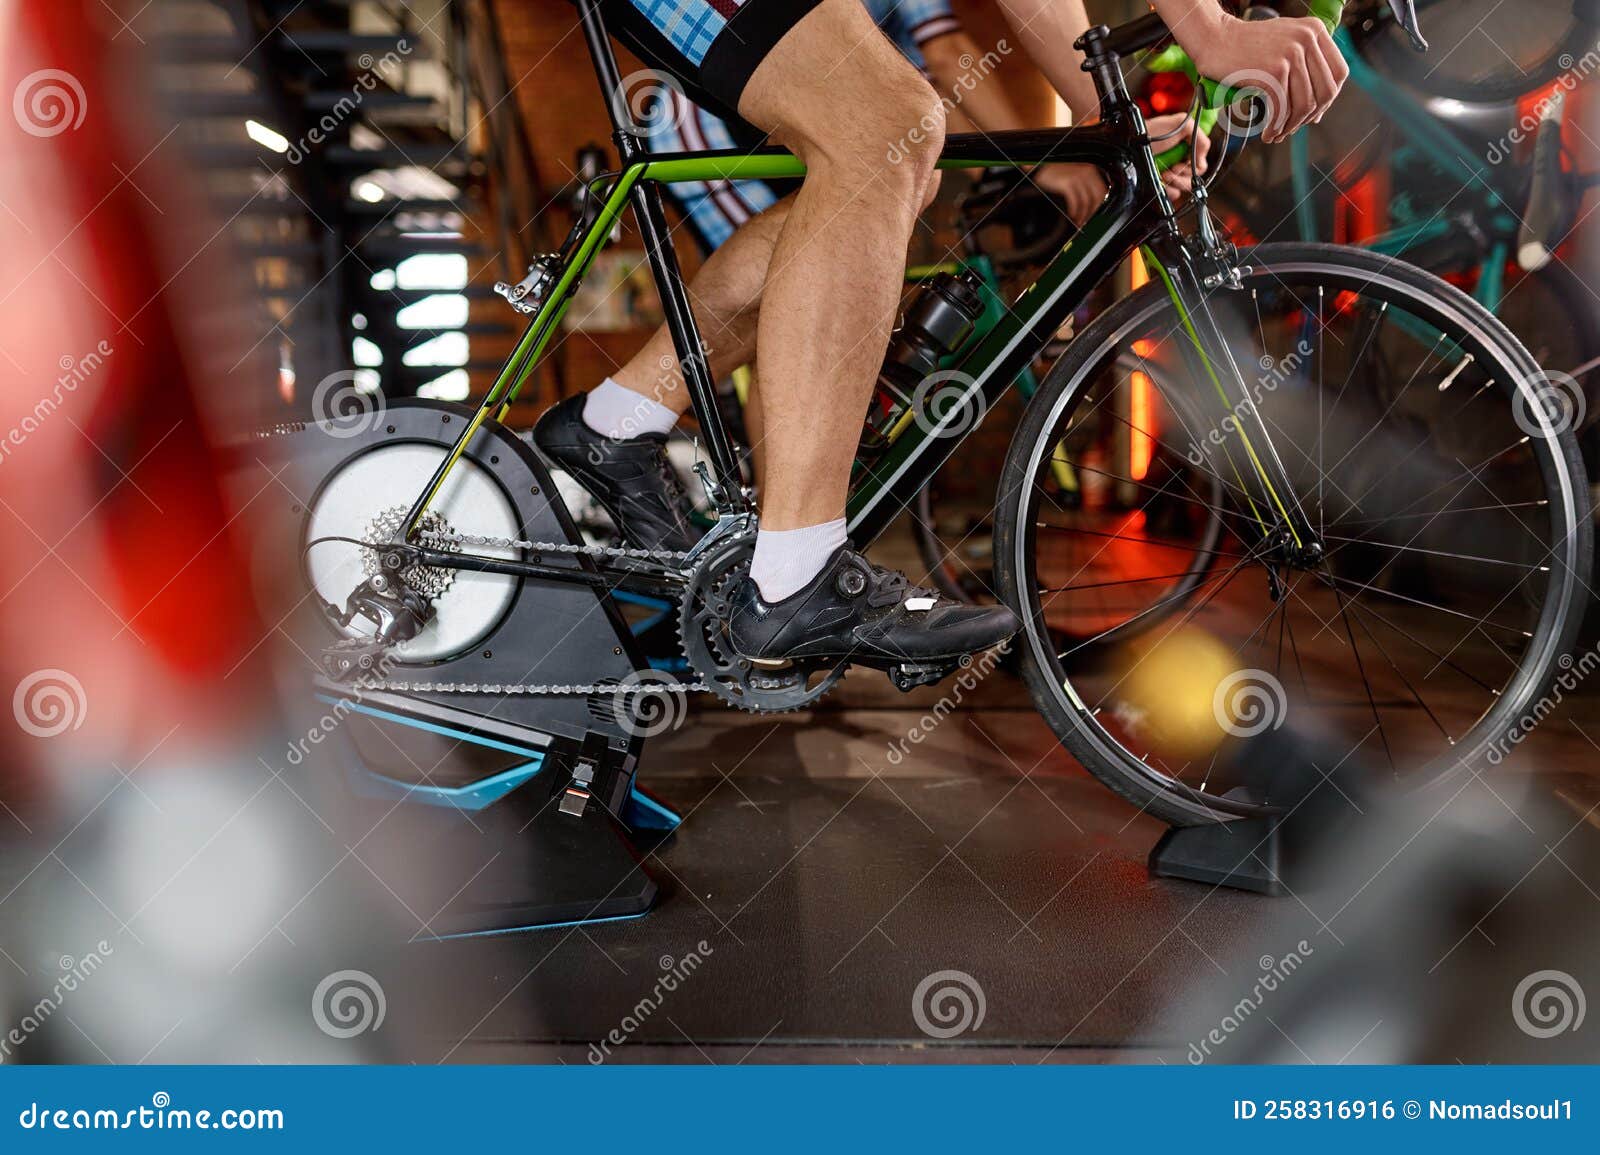 man cycling shot with closeup on leg pedaling